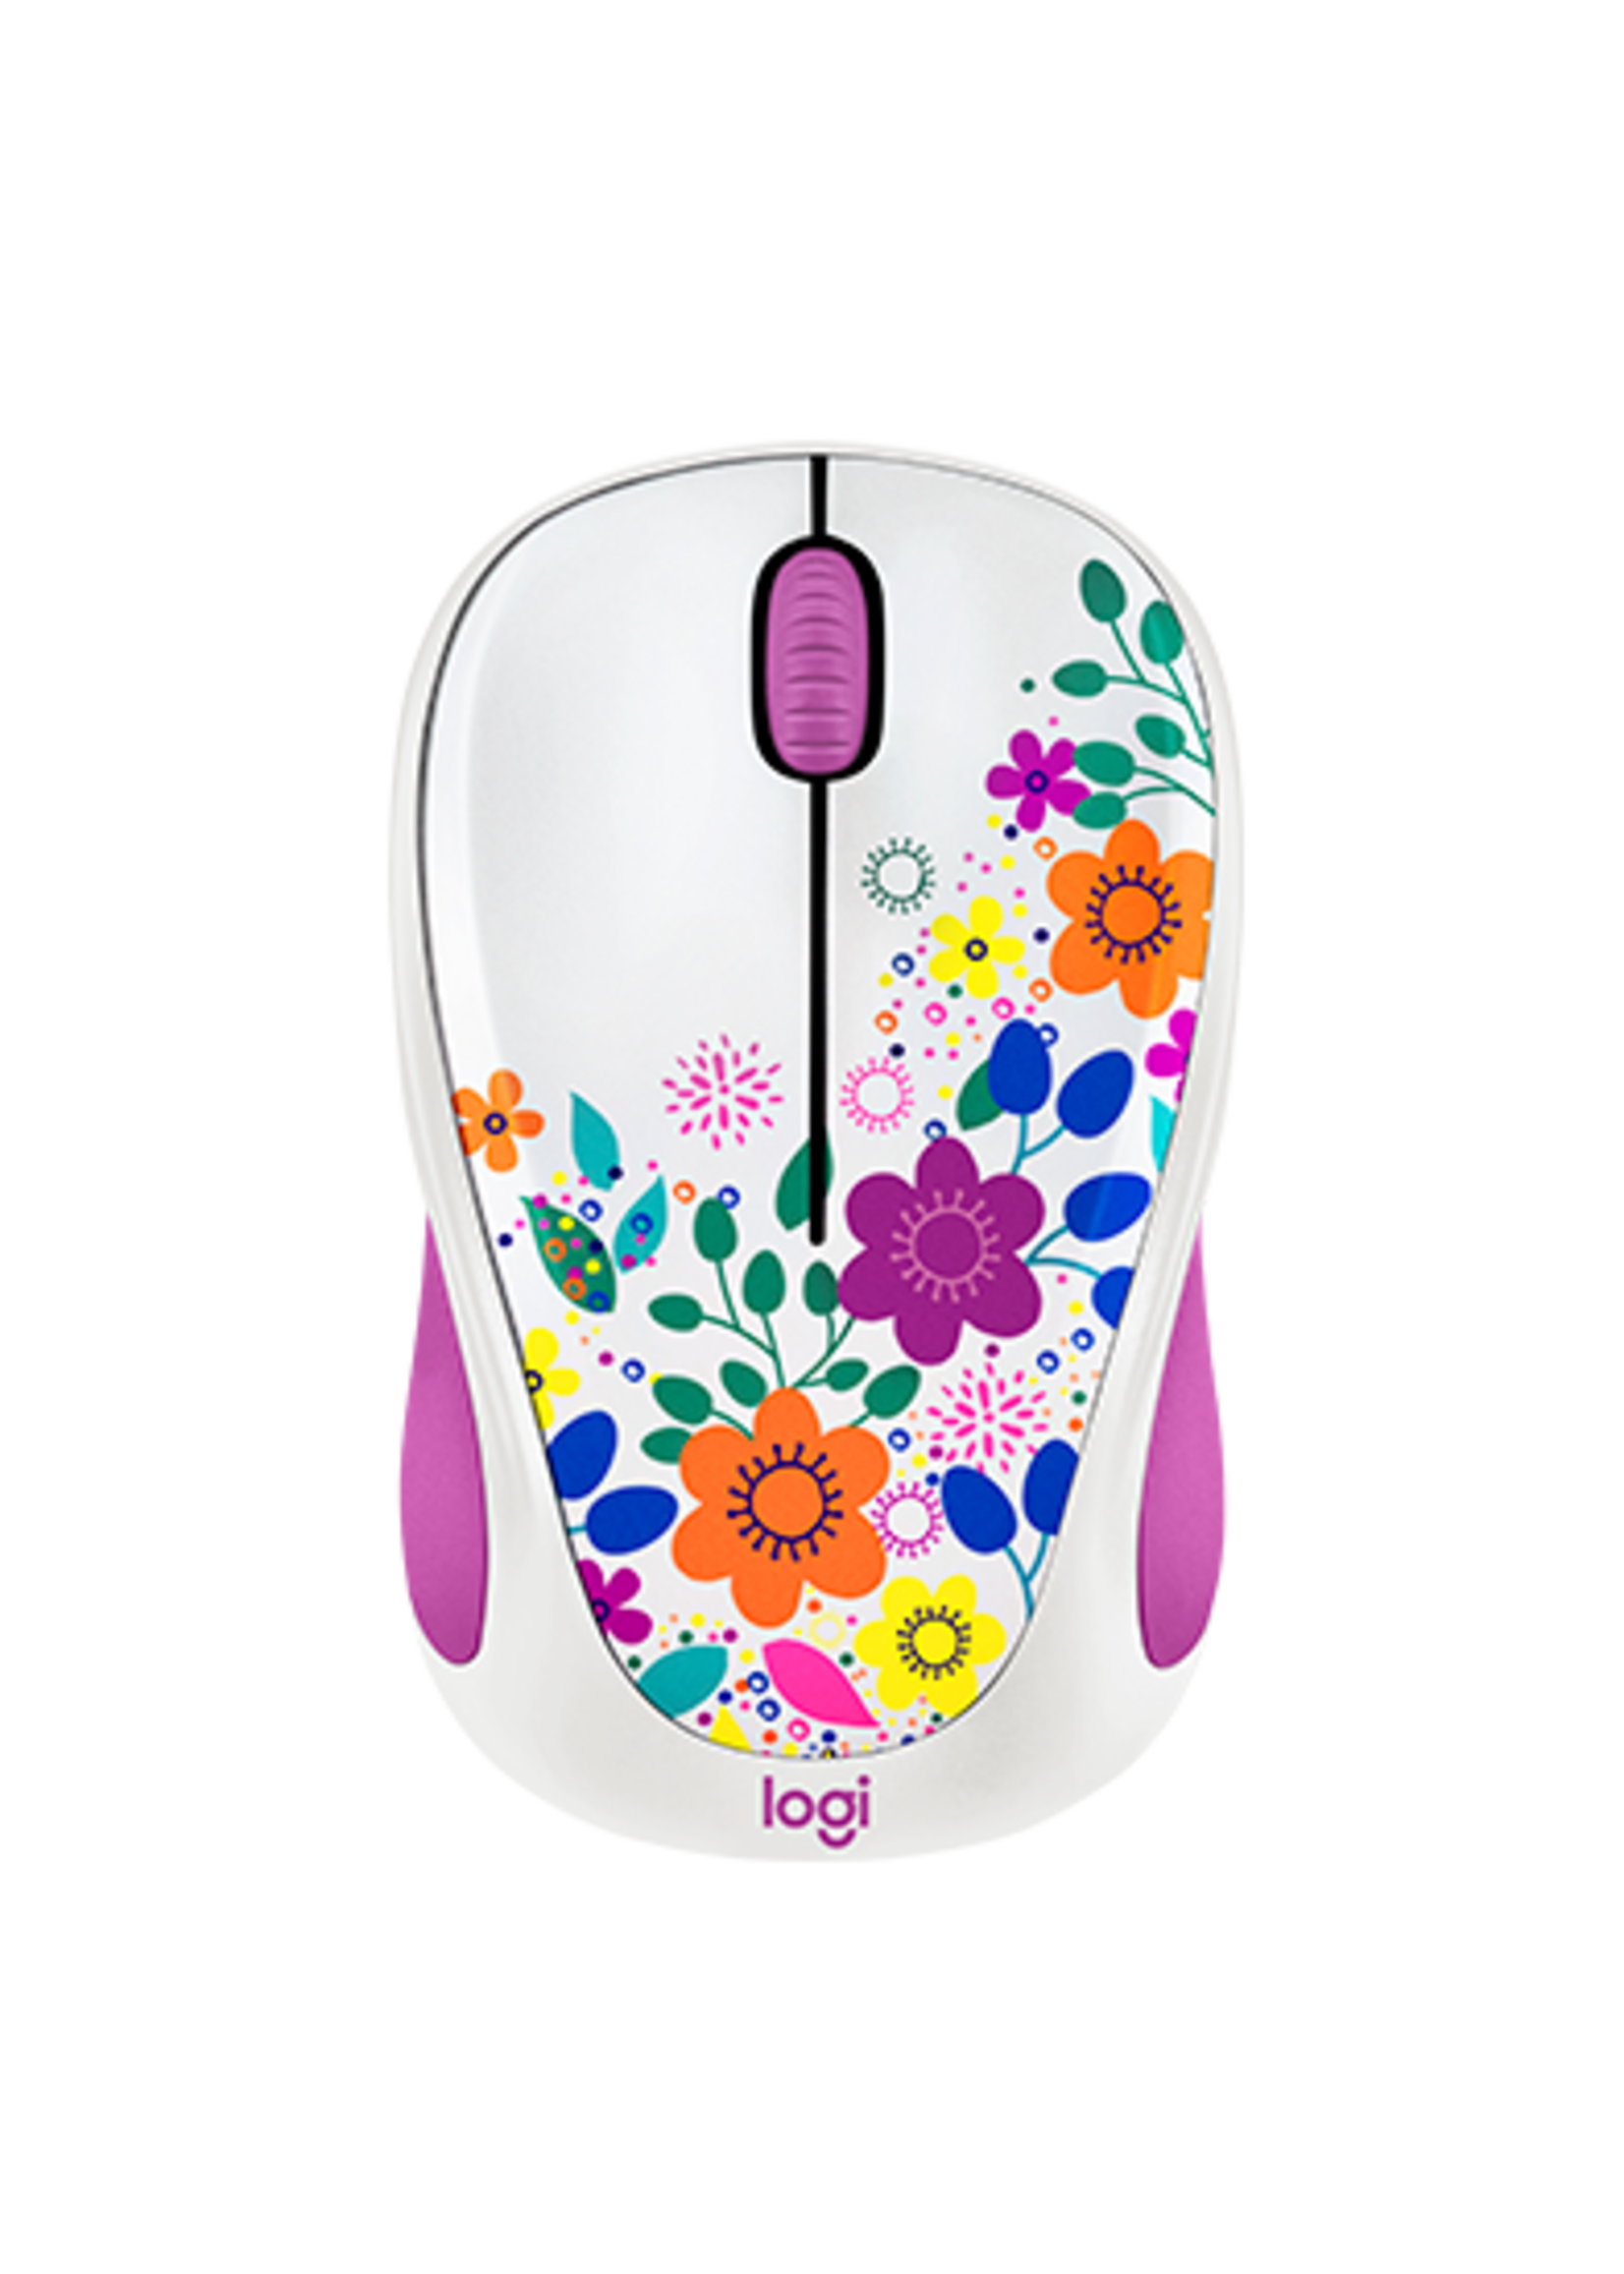 LOGITECH Wireless Computer Mouse by Logitech